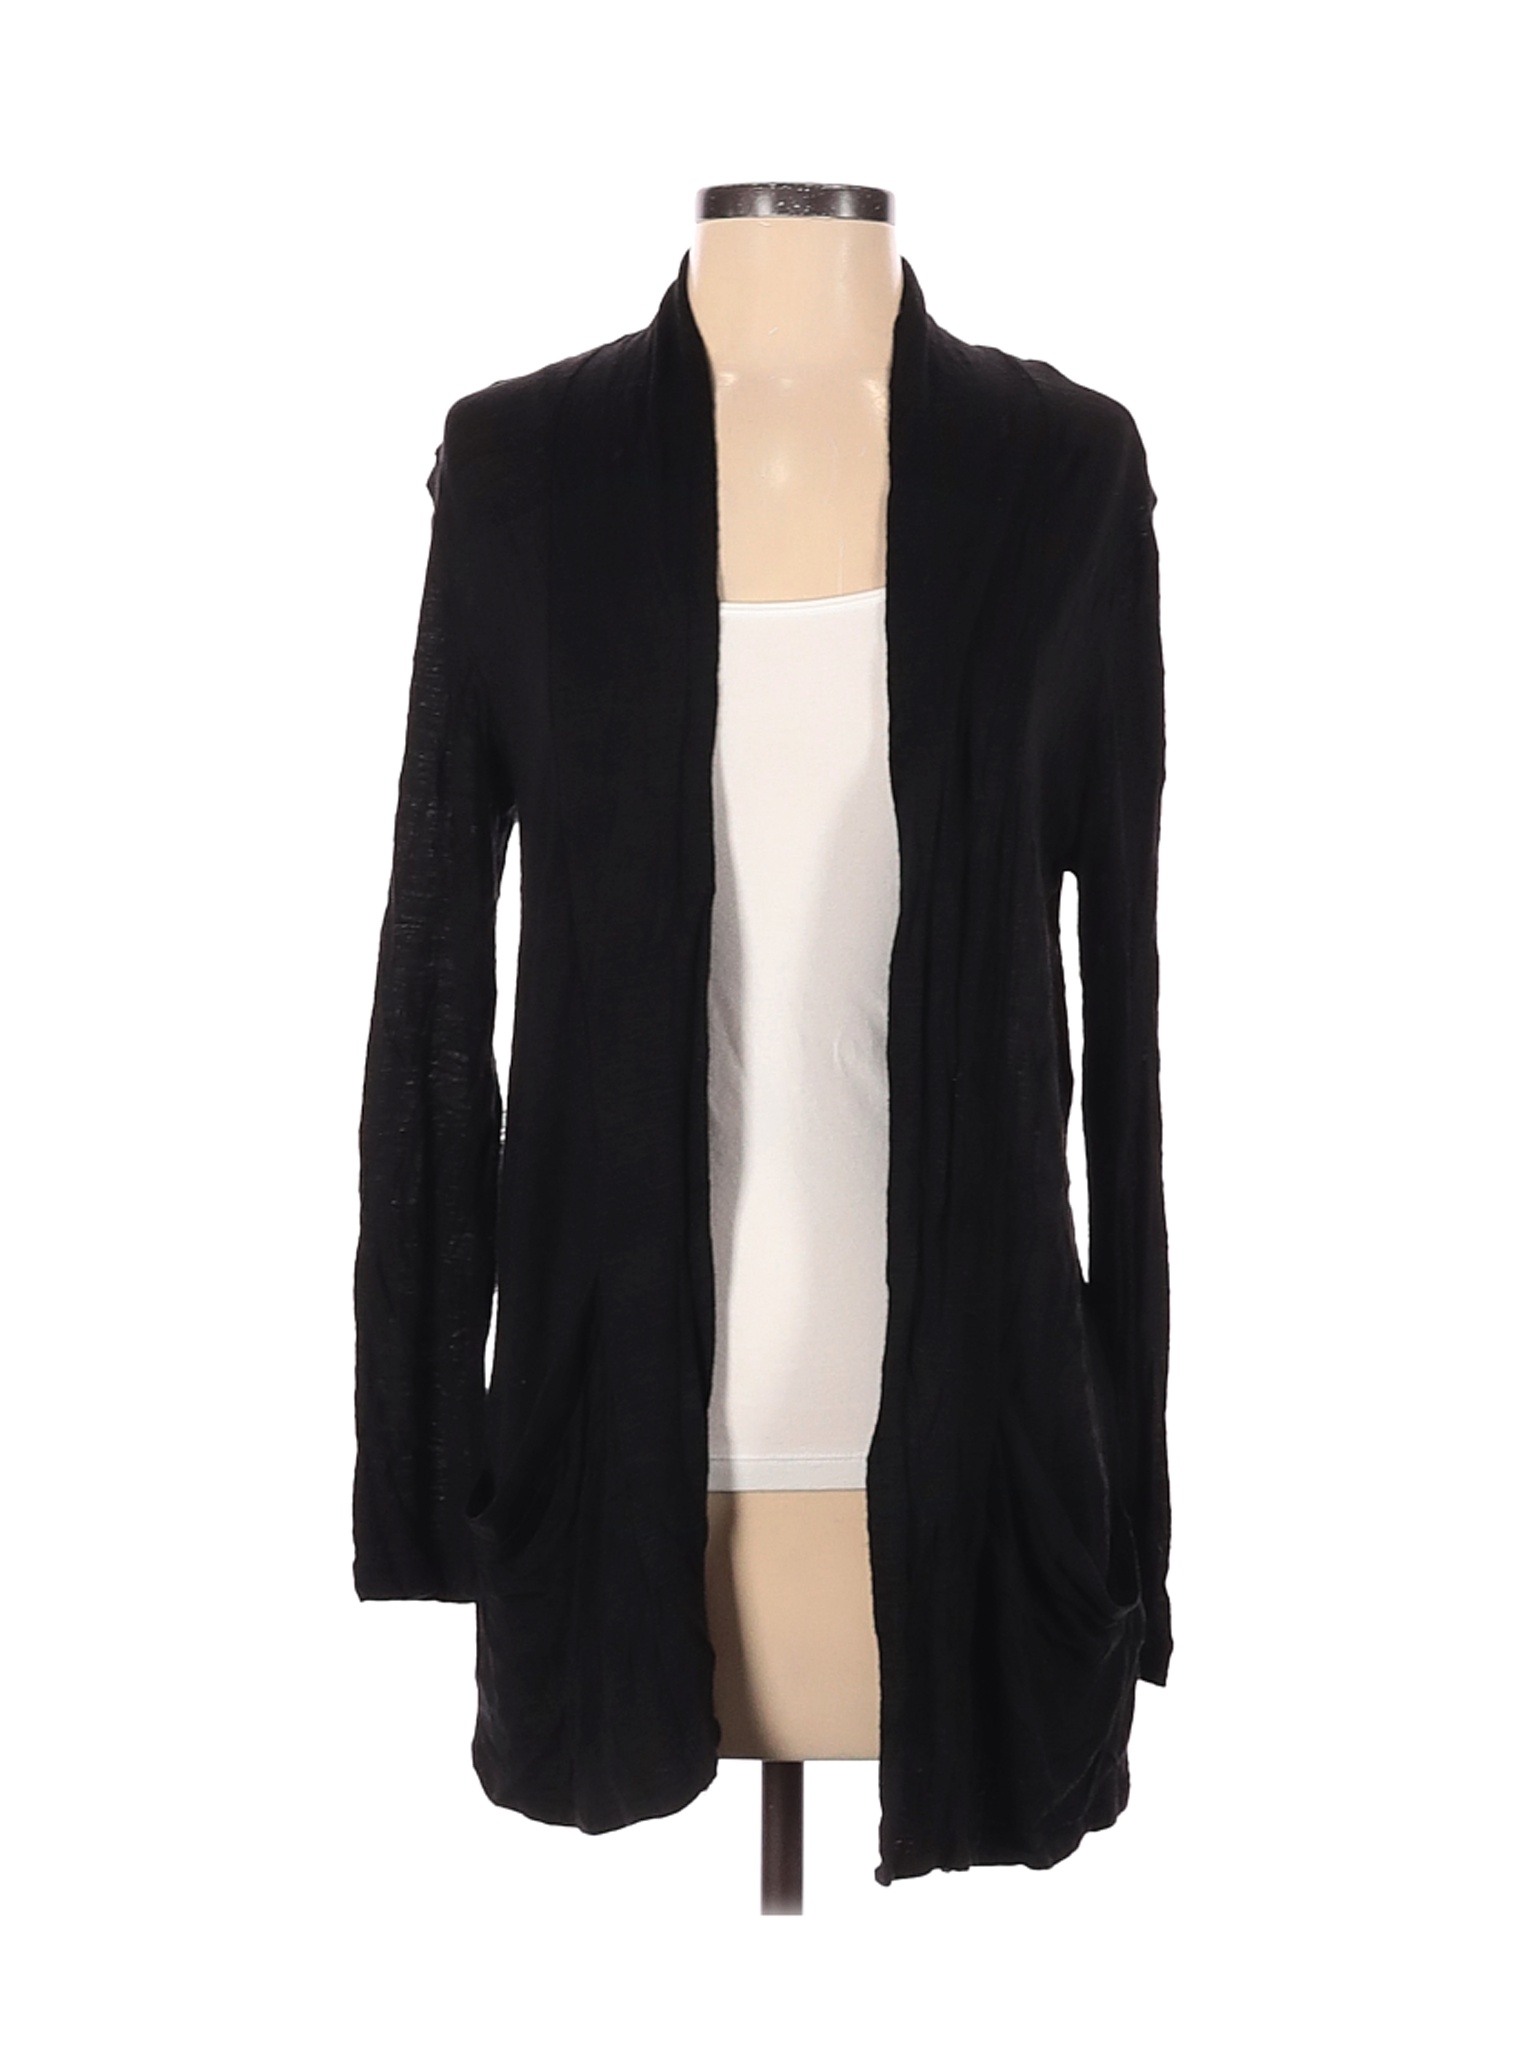 H&M Women Black Cardigan S | eBay